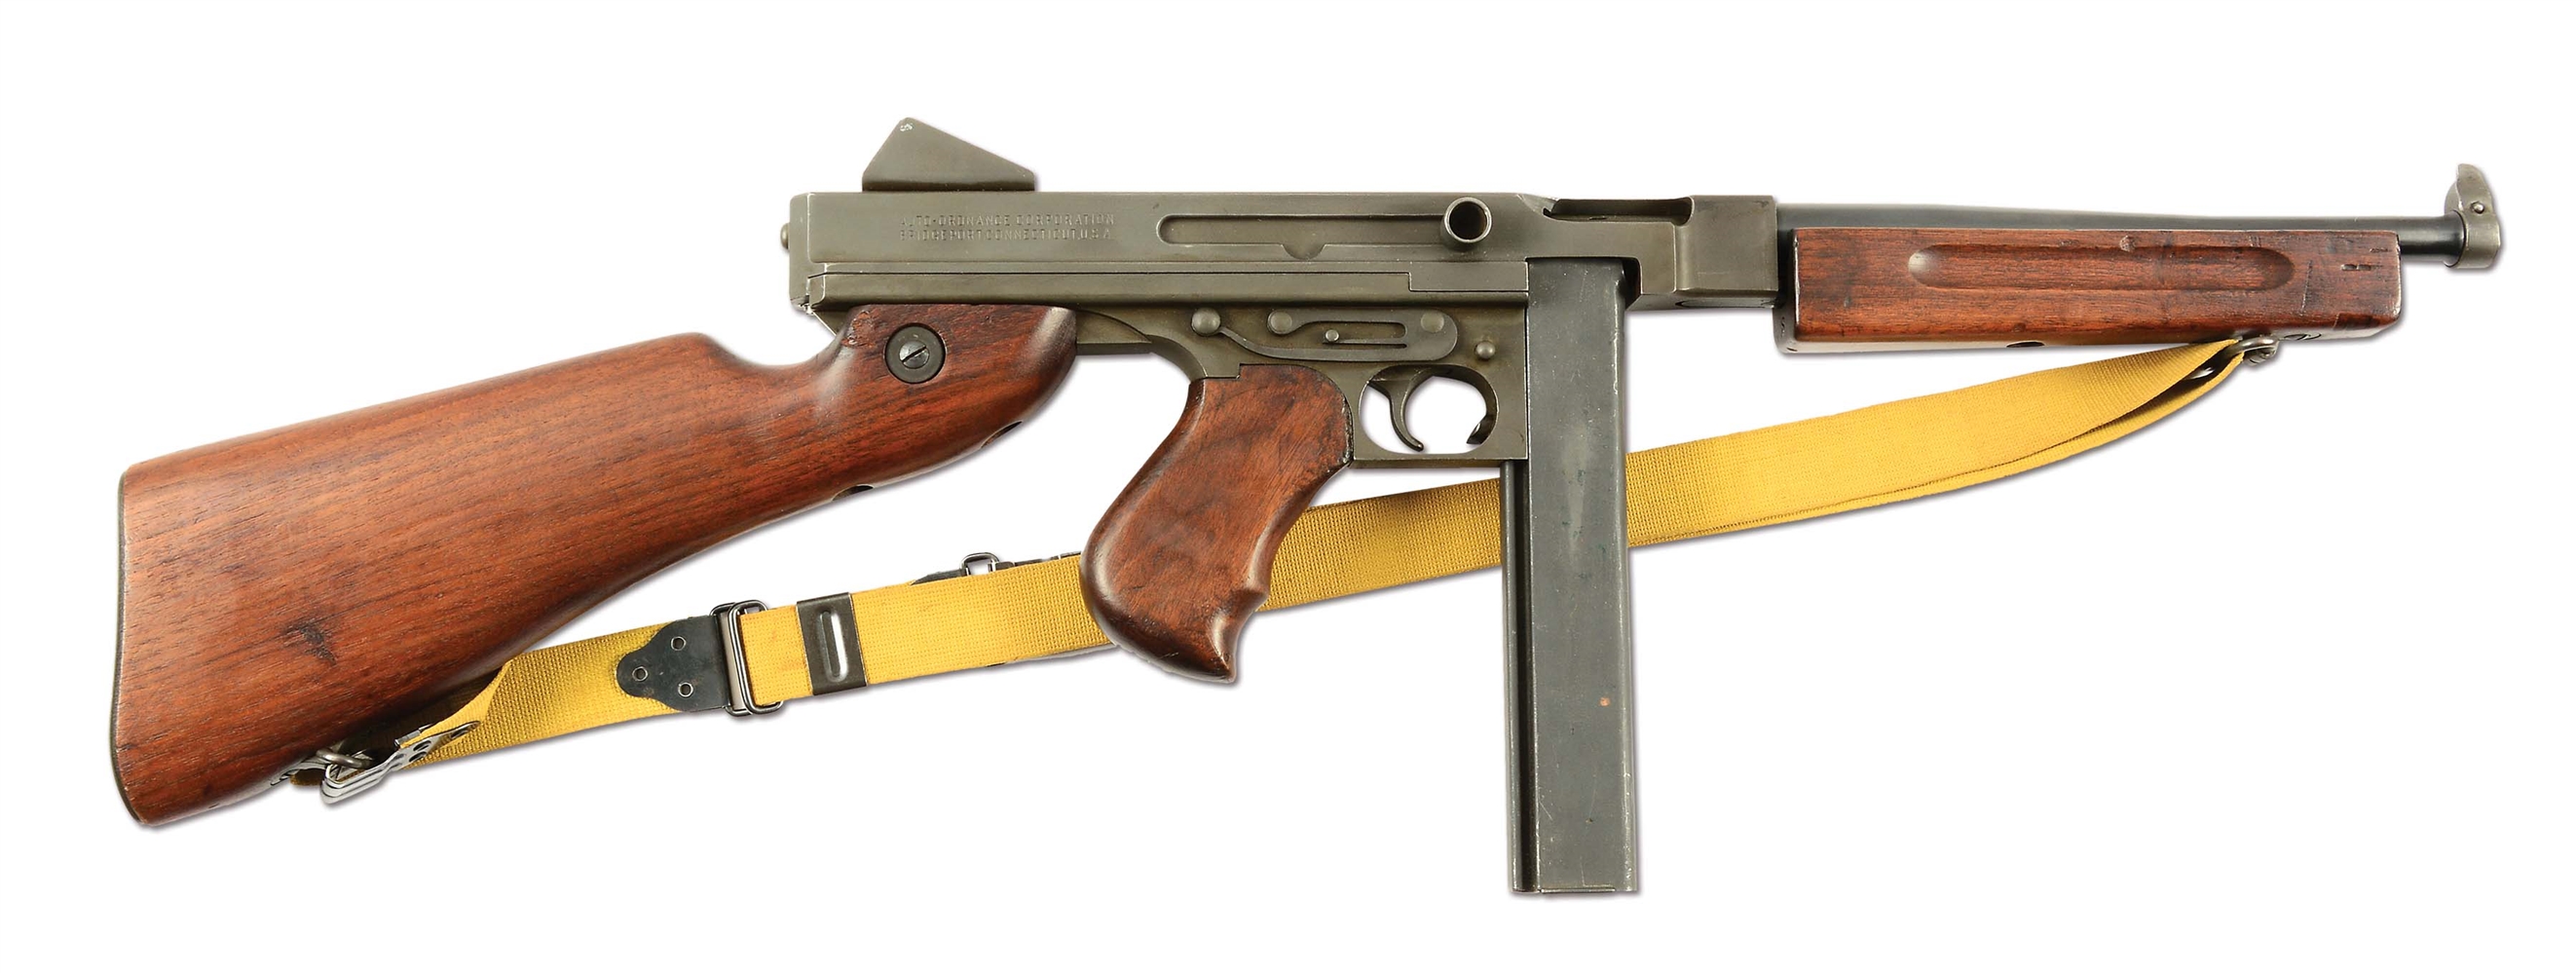 (N) ATTRACTIVE WORLD WAR II AUTO ORDNANCE M1A1 THOMPSON MACHINE GUN WITH ACCESSORIES (CURIO & RELIC).